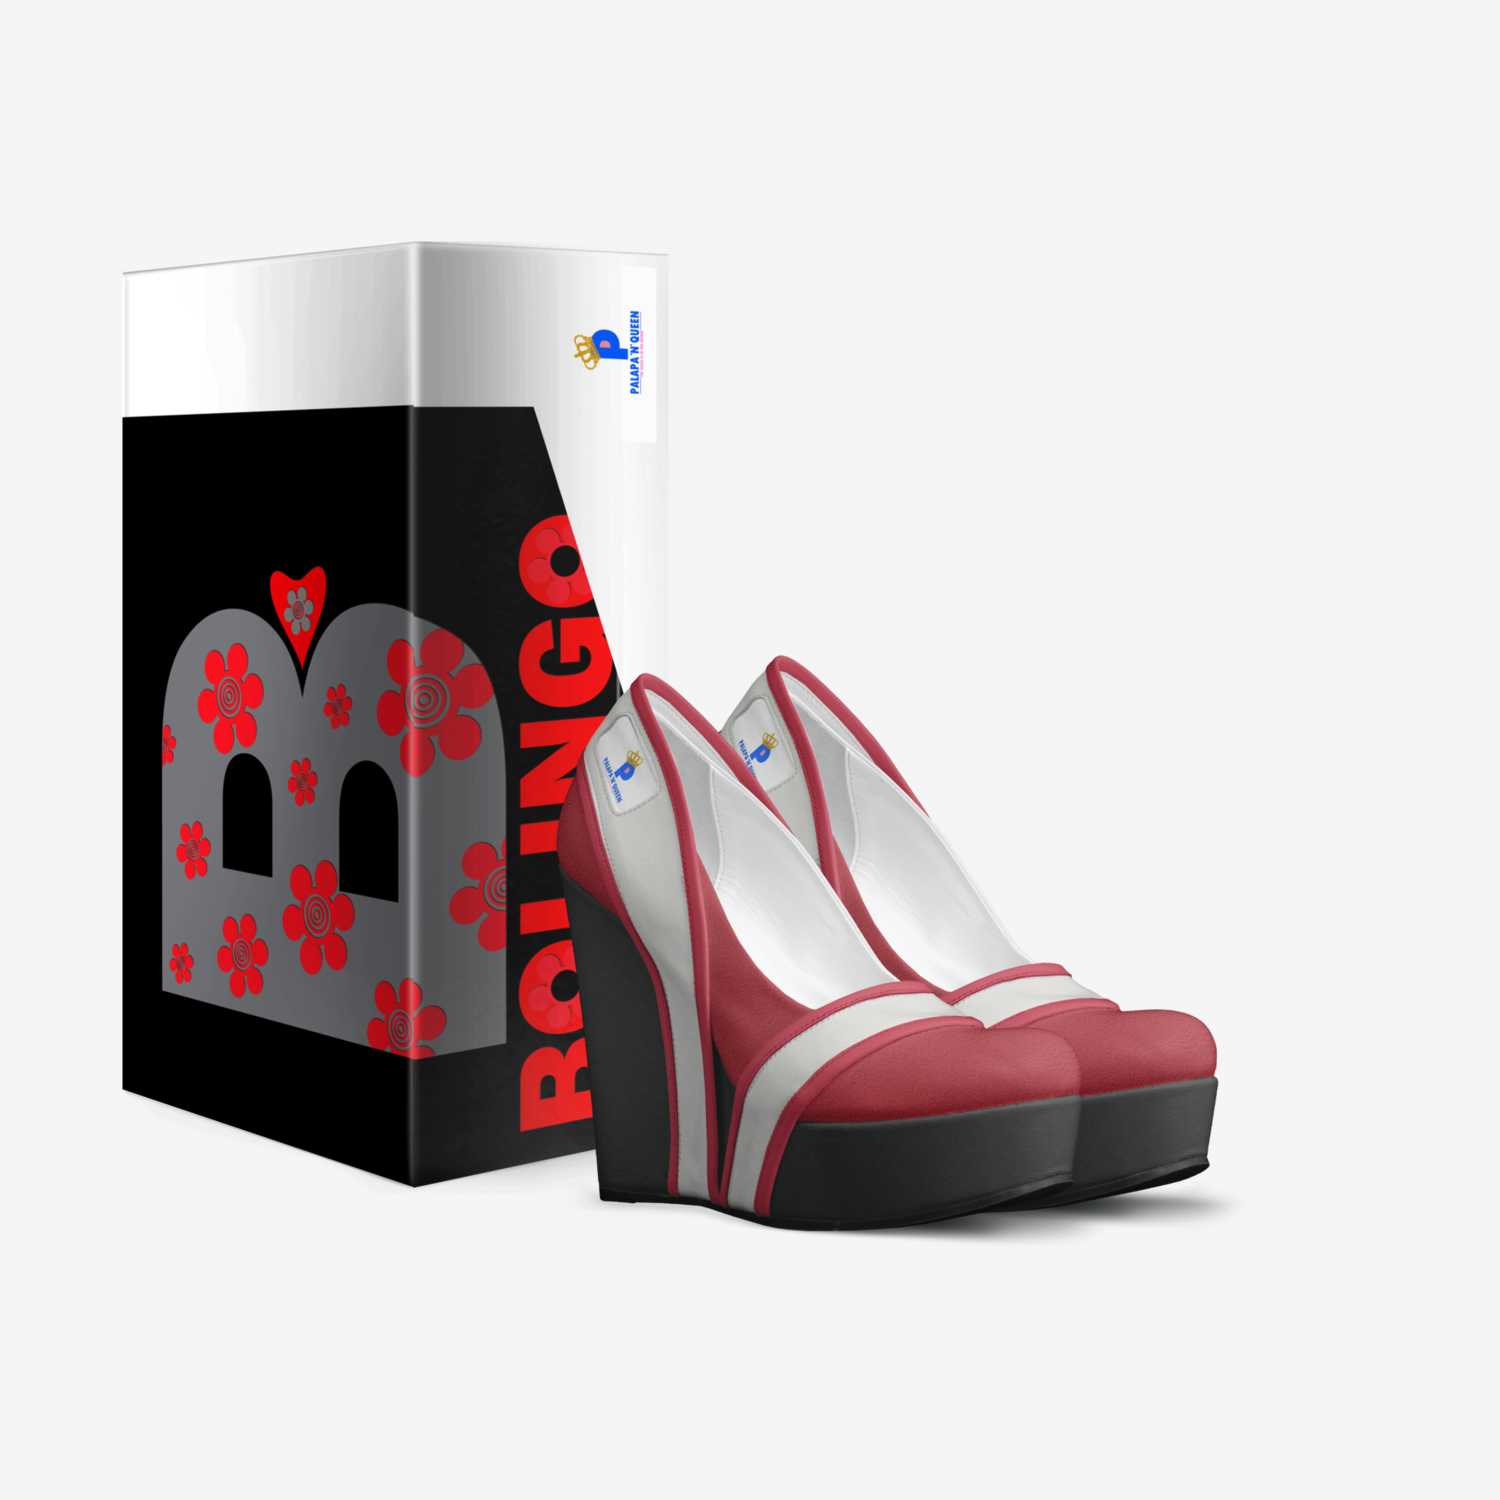 Bolingo custom made in Italy shoes by Niina Nia Kabesa | Box view